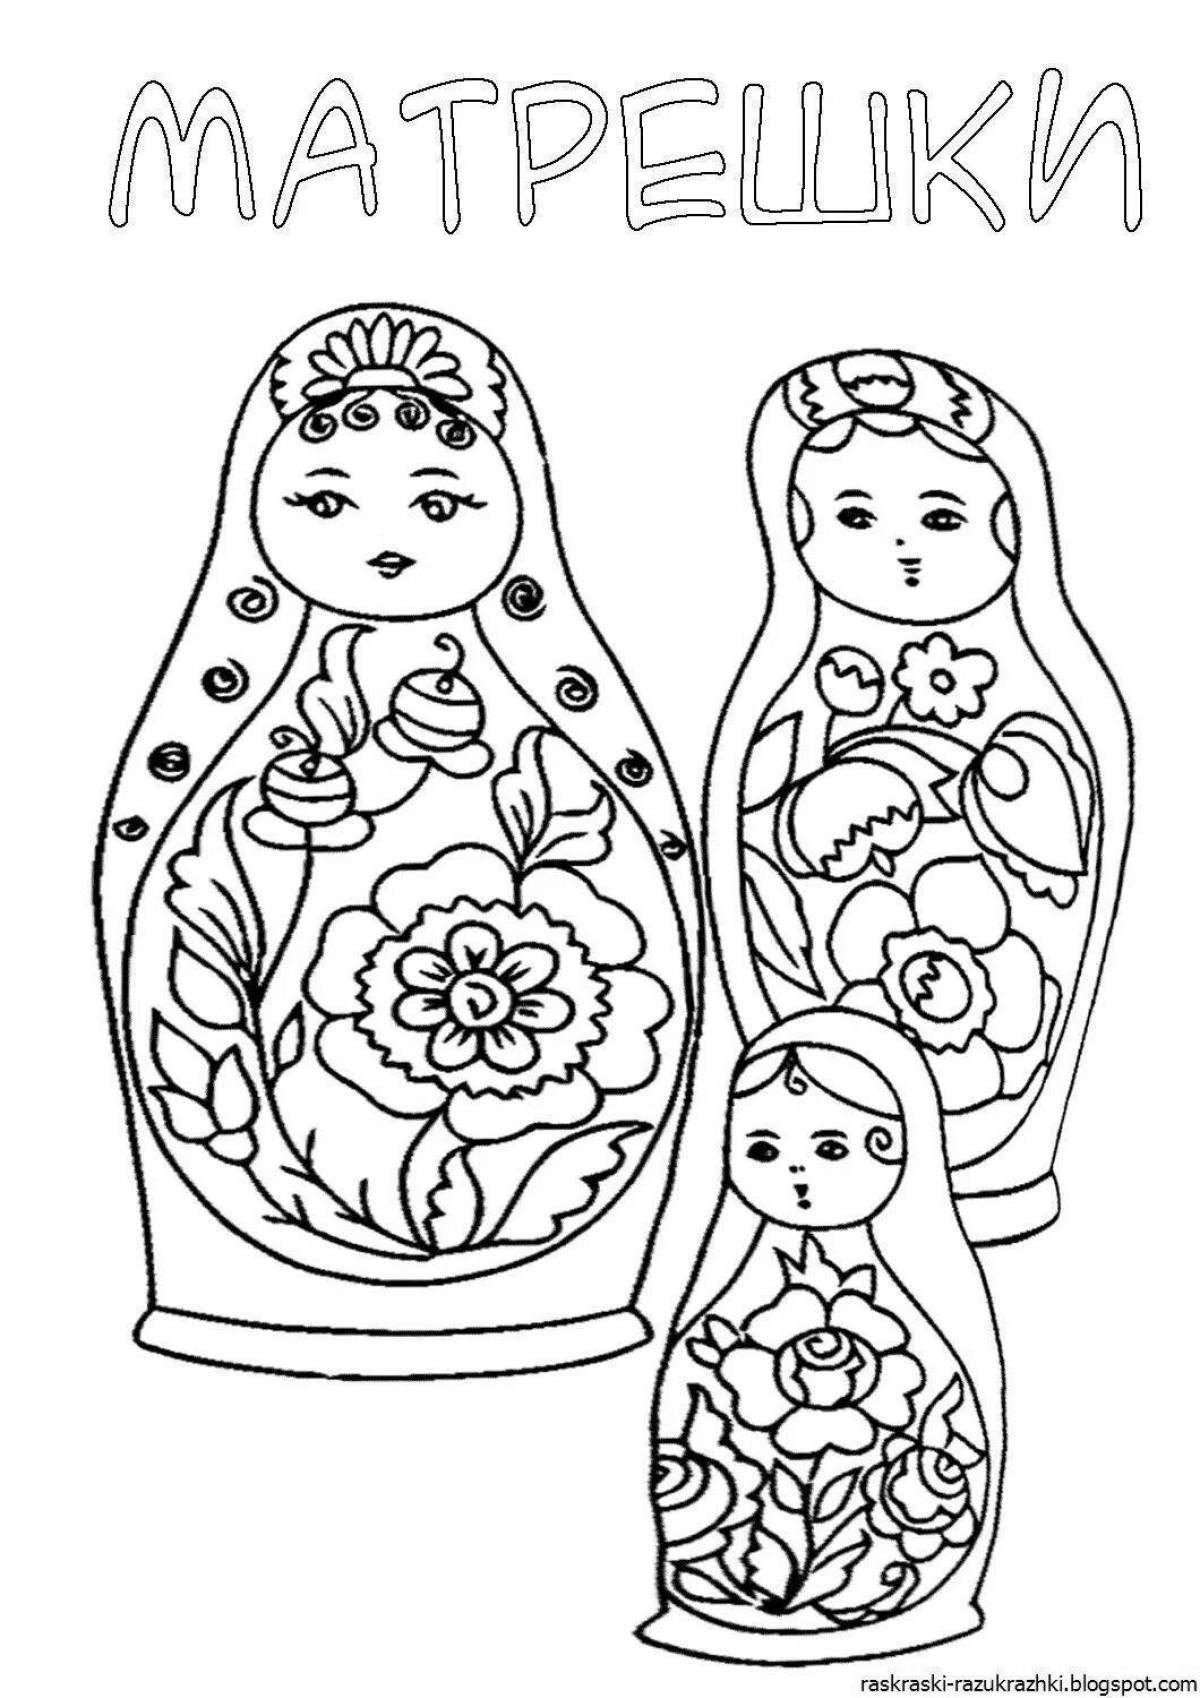 Fun Russian folk coloring book for kids